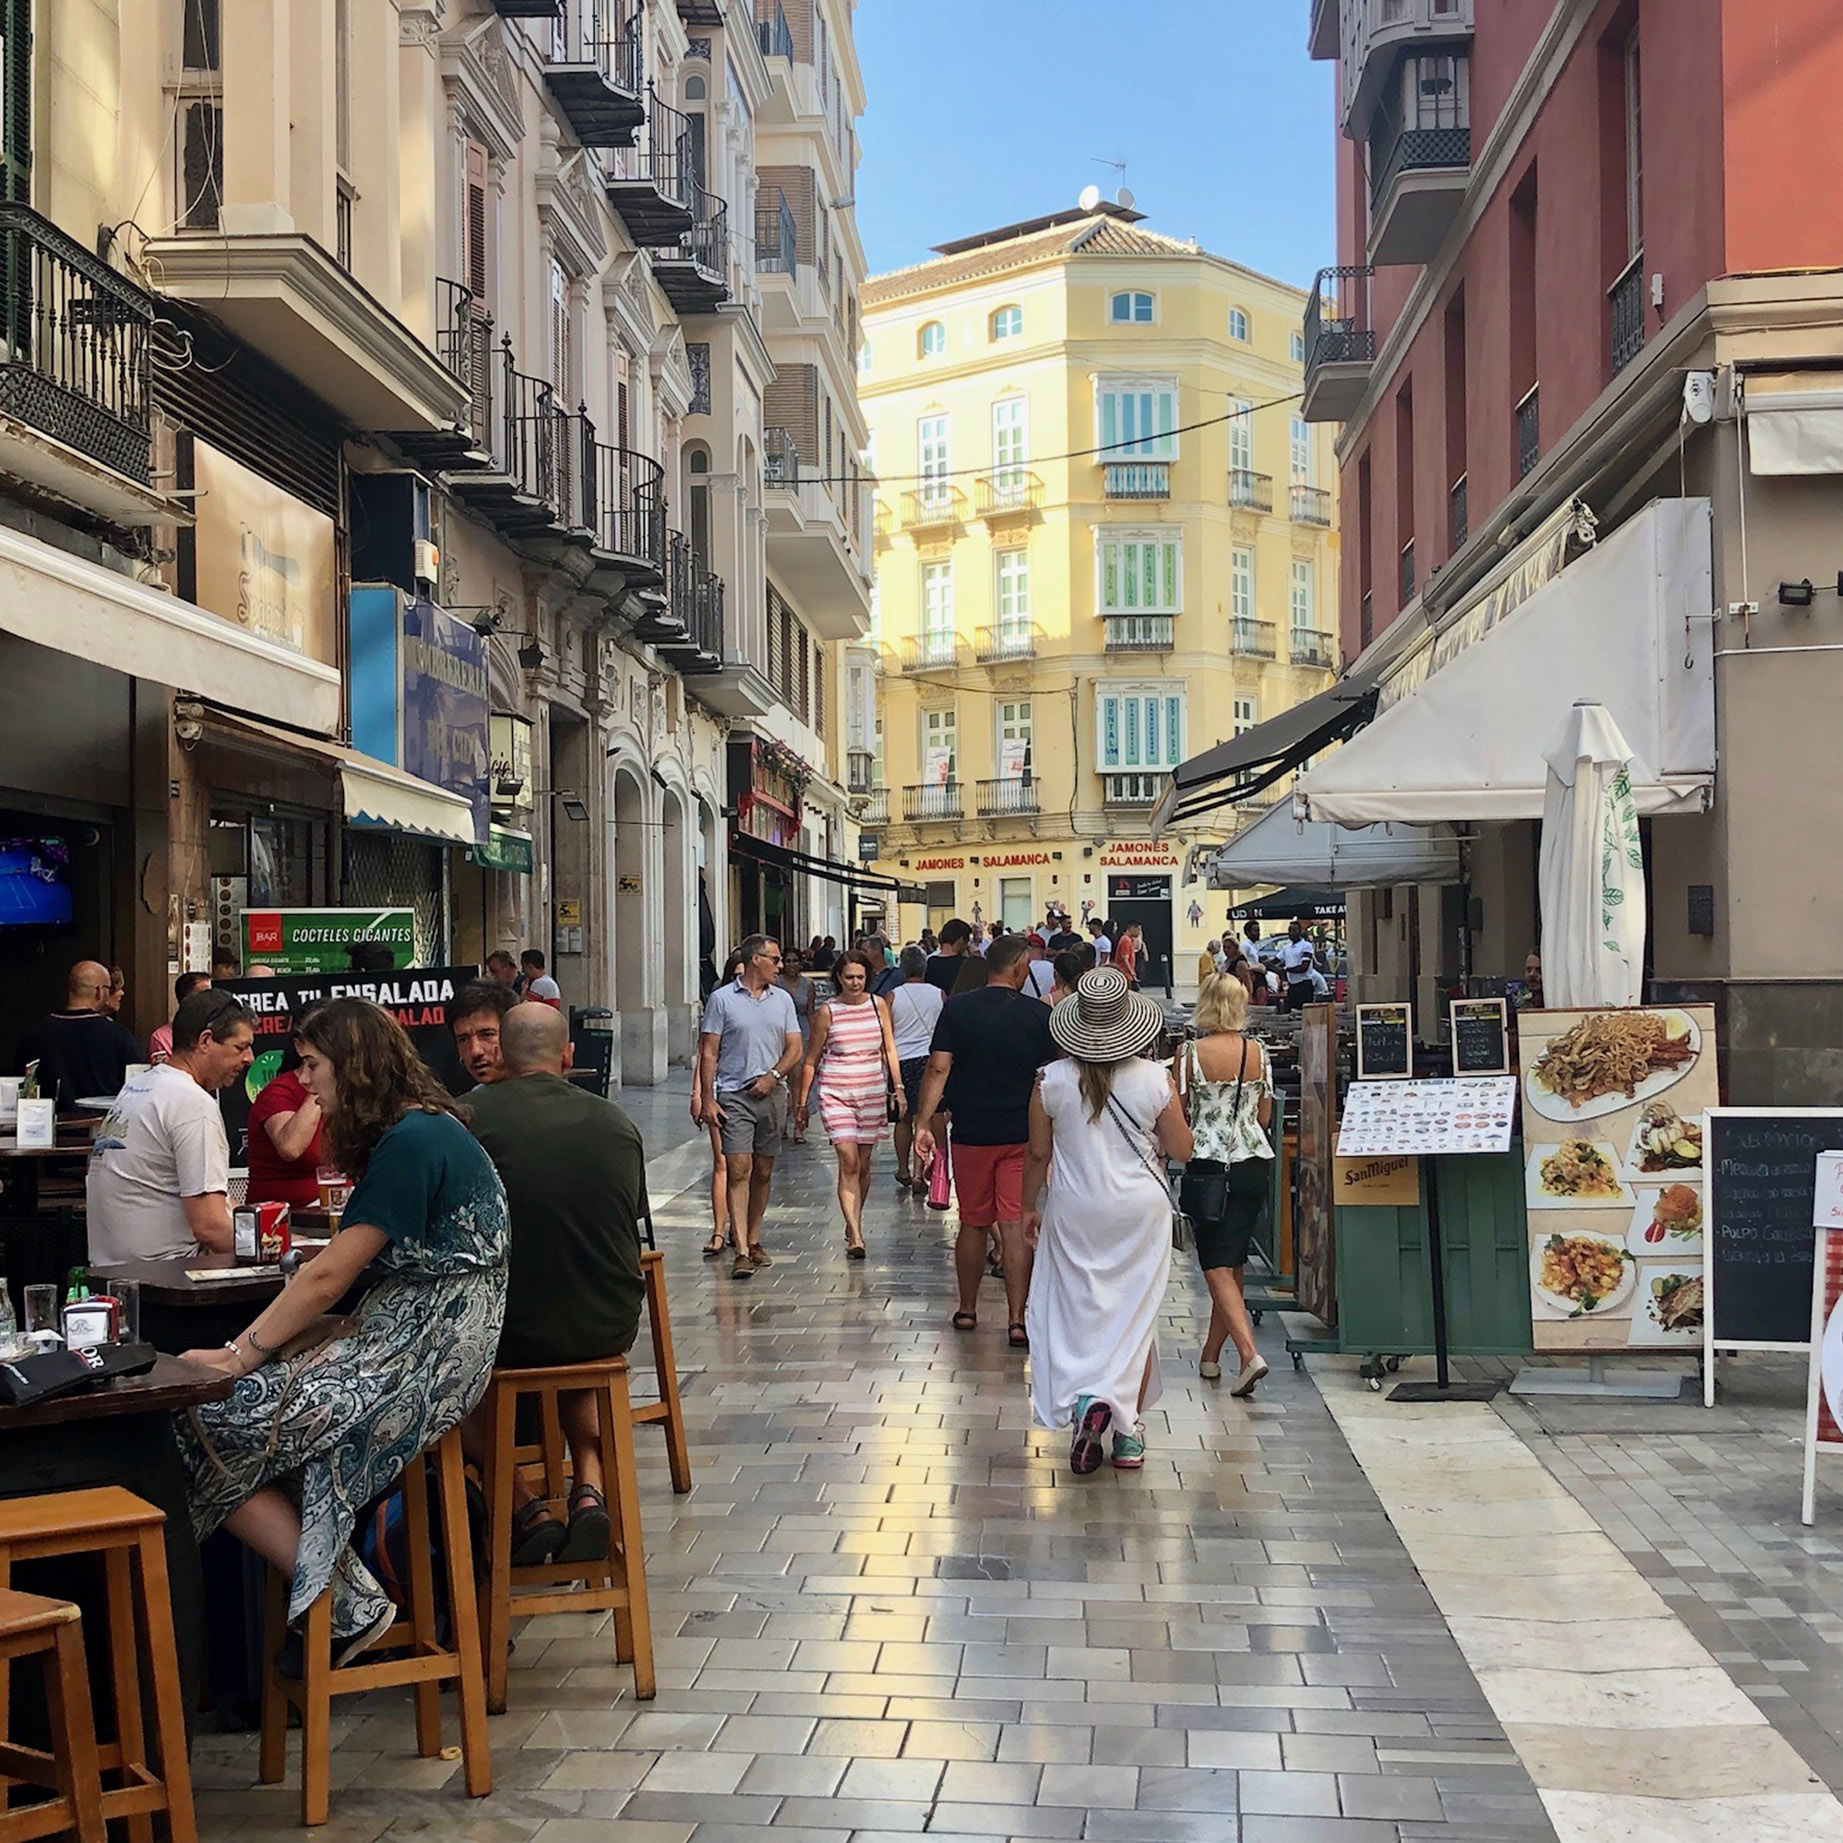 Local en venta en el centro histórico de Málaga para comercio o restauración